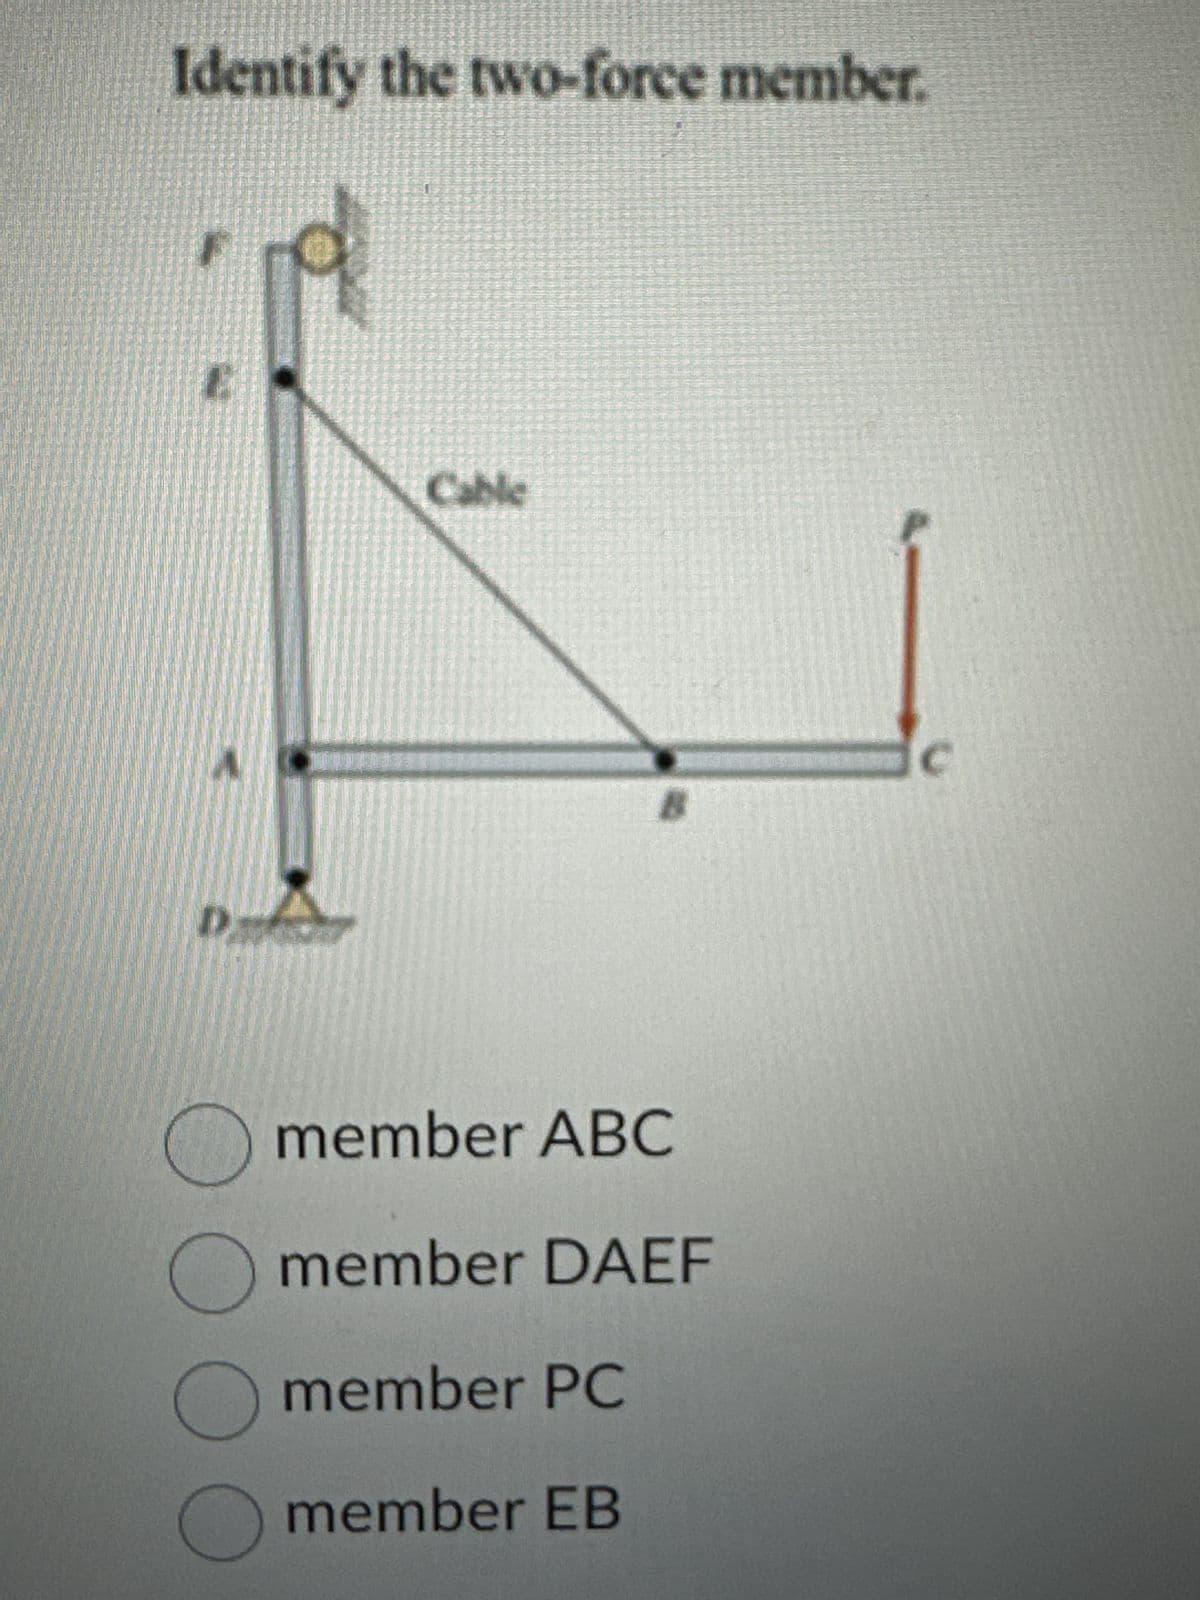 OC
Identify the two-force member.
Cable
member ABC
member DAEF
member PC
member EB